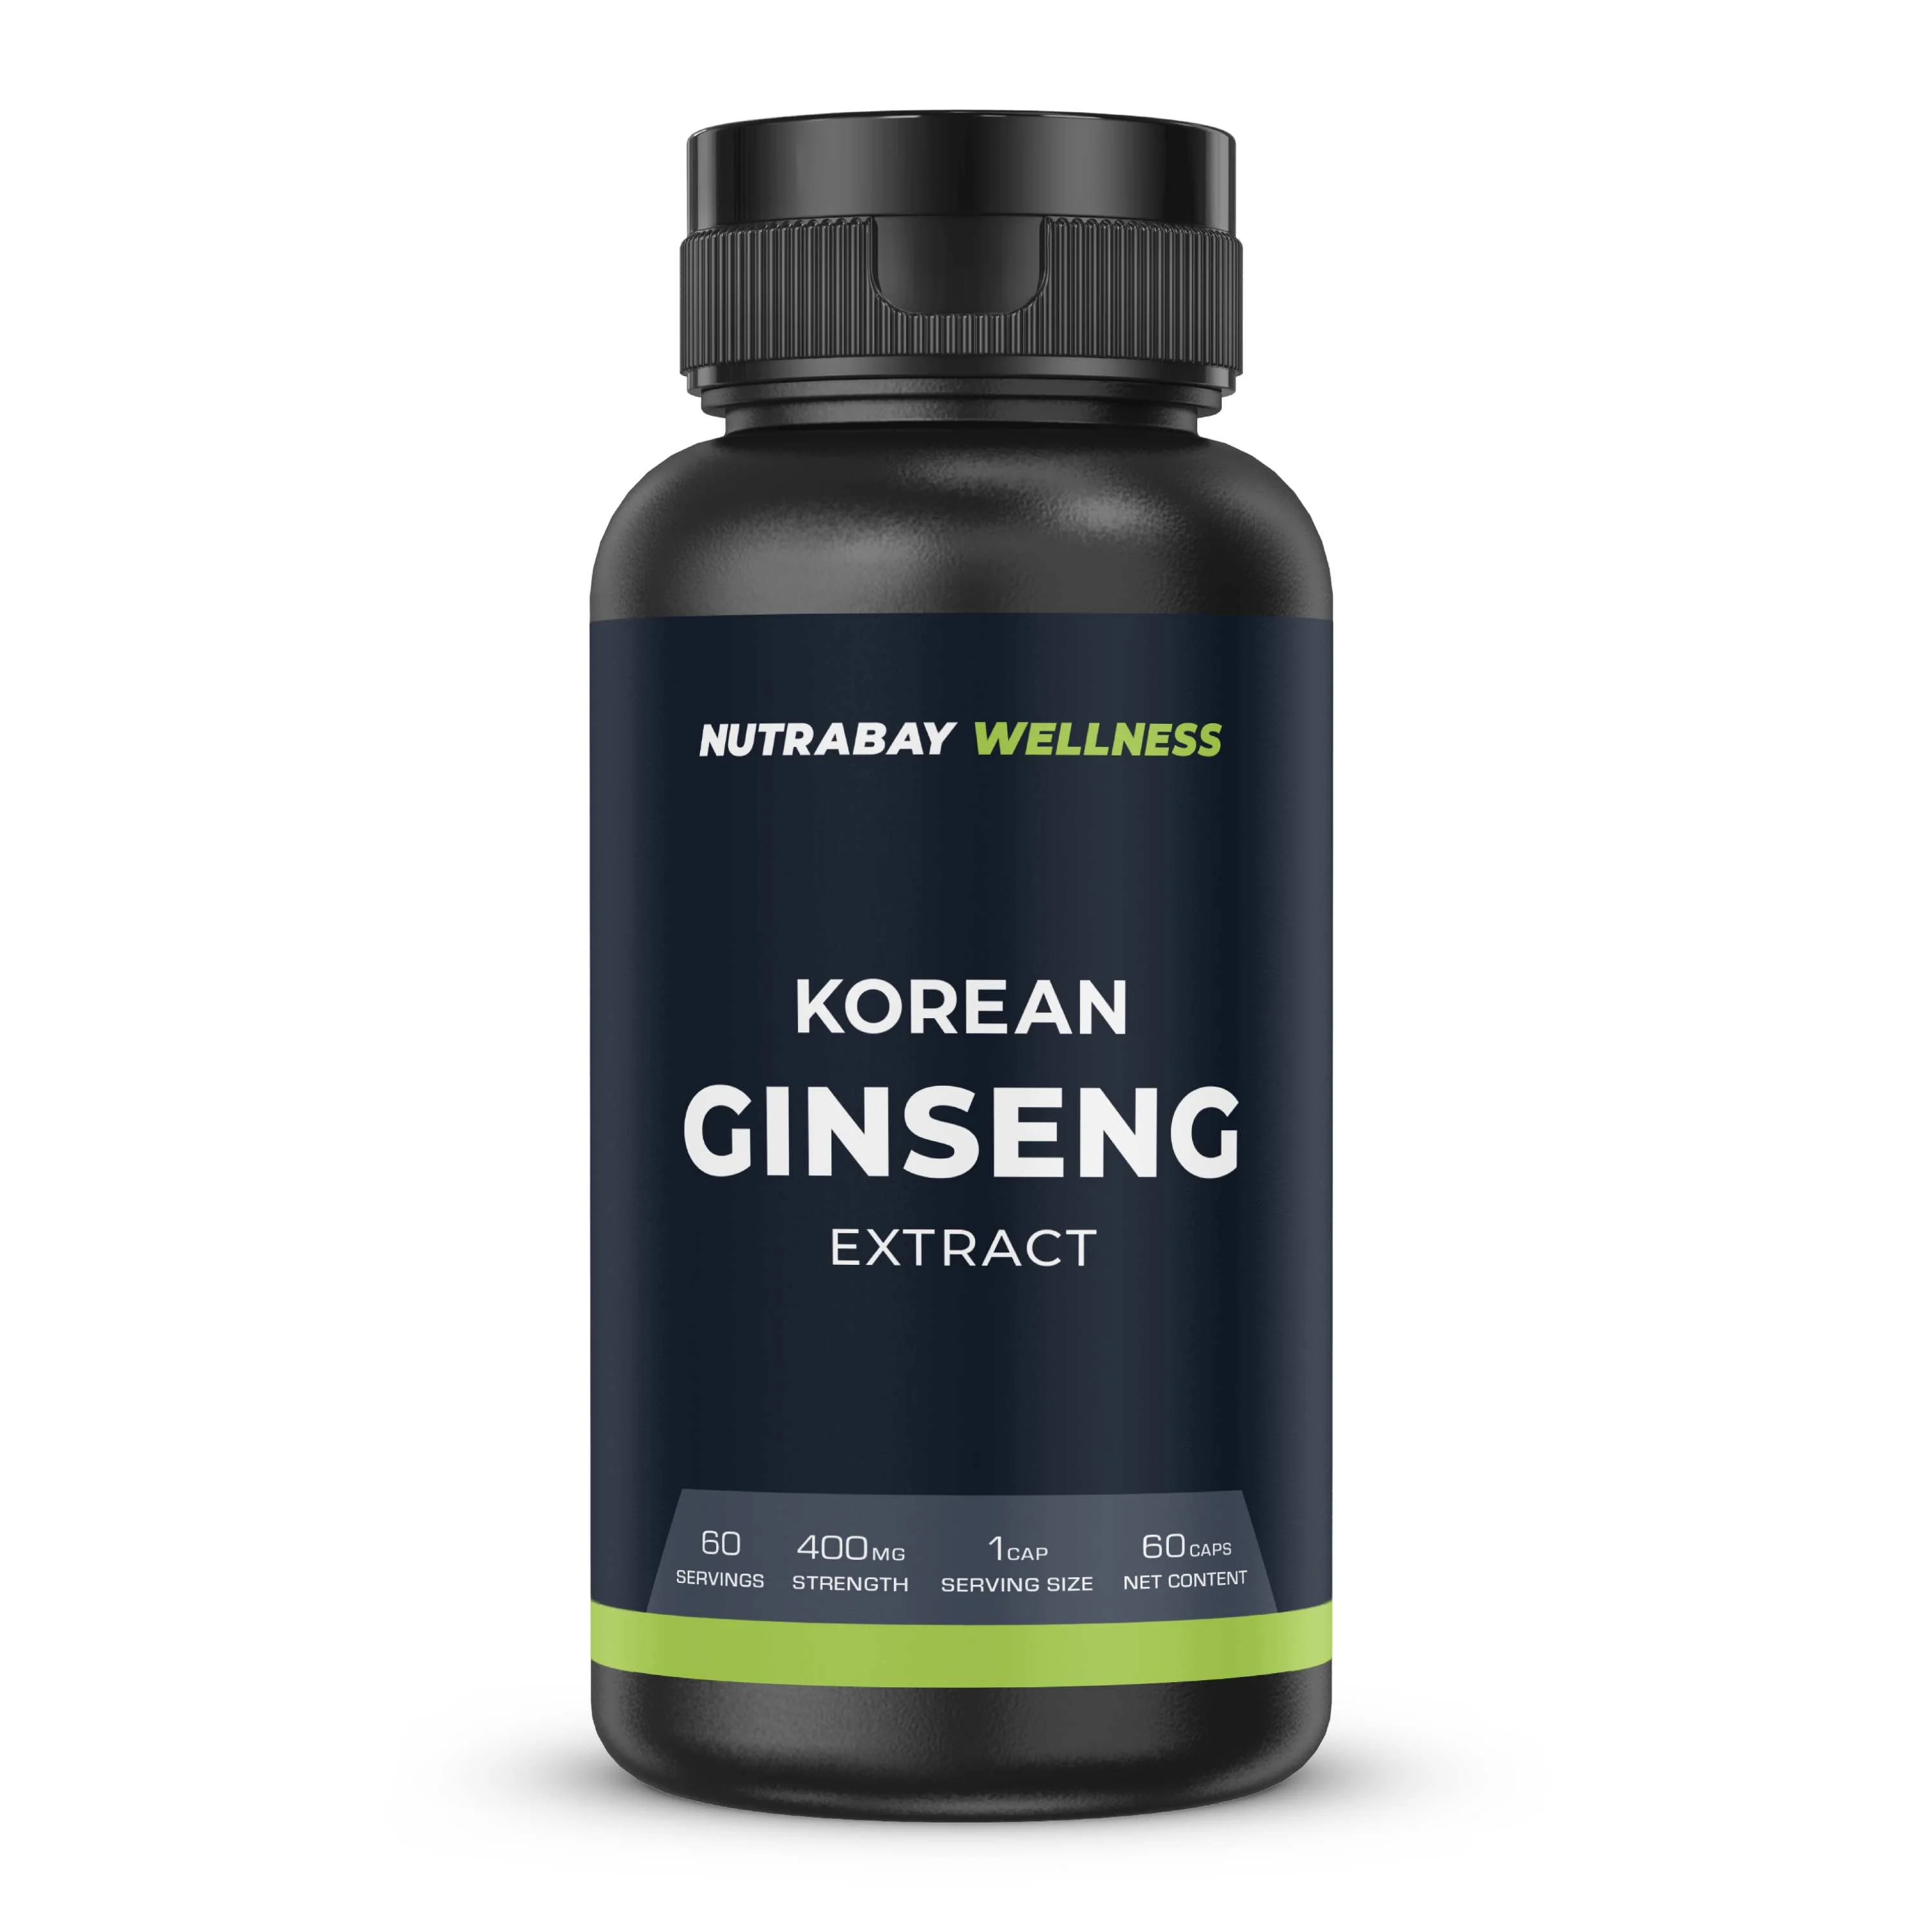 Nutrabay Wellness Korean Ginseng Extract Image